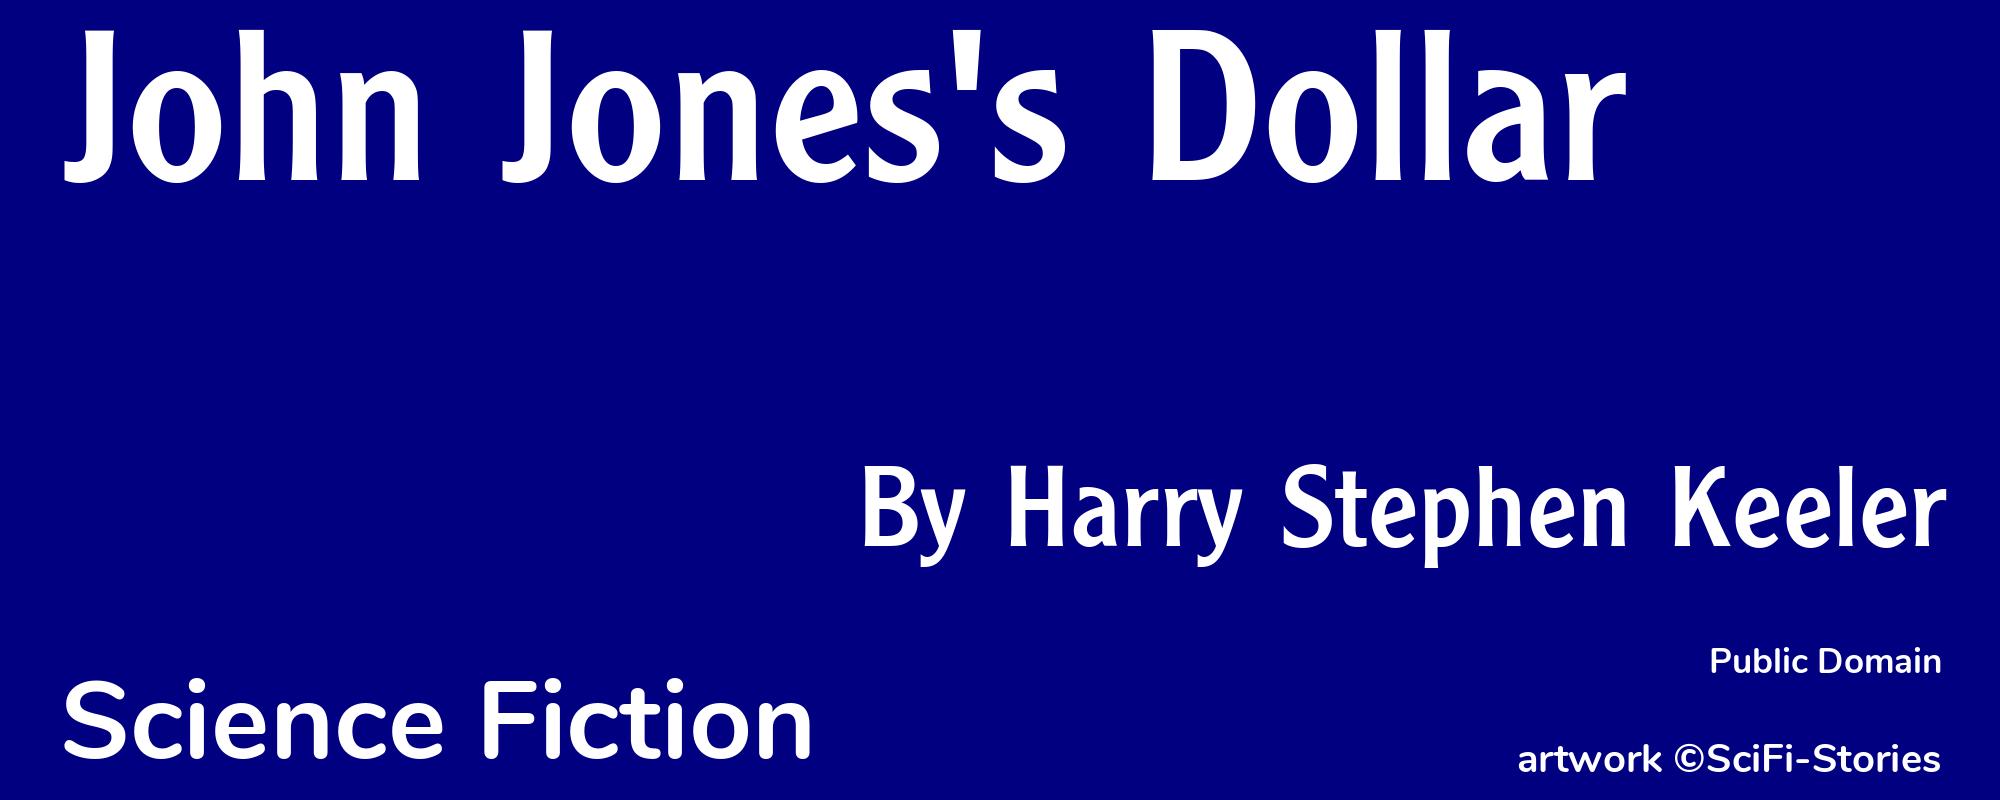 John Jones's Dollar - Cover